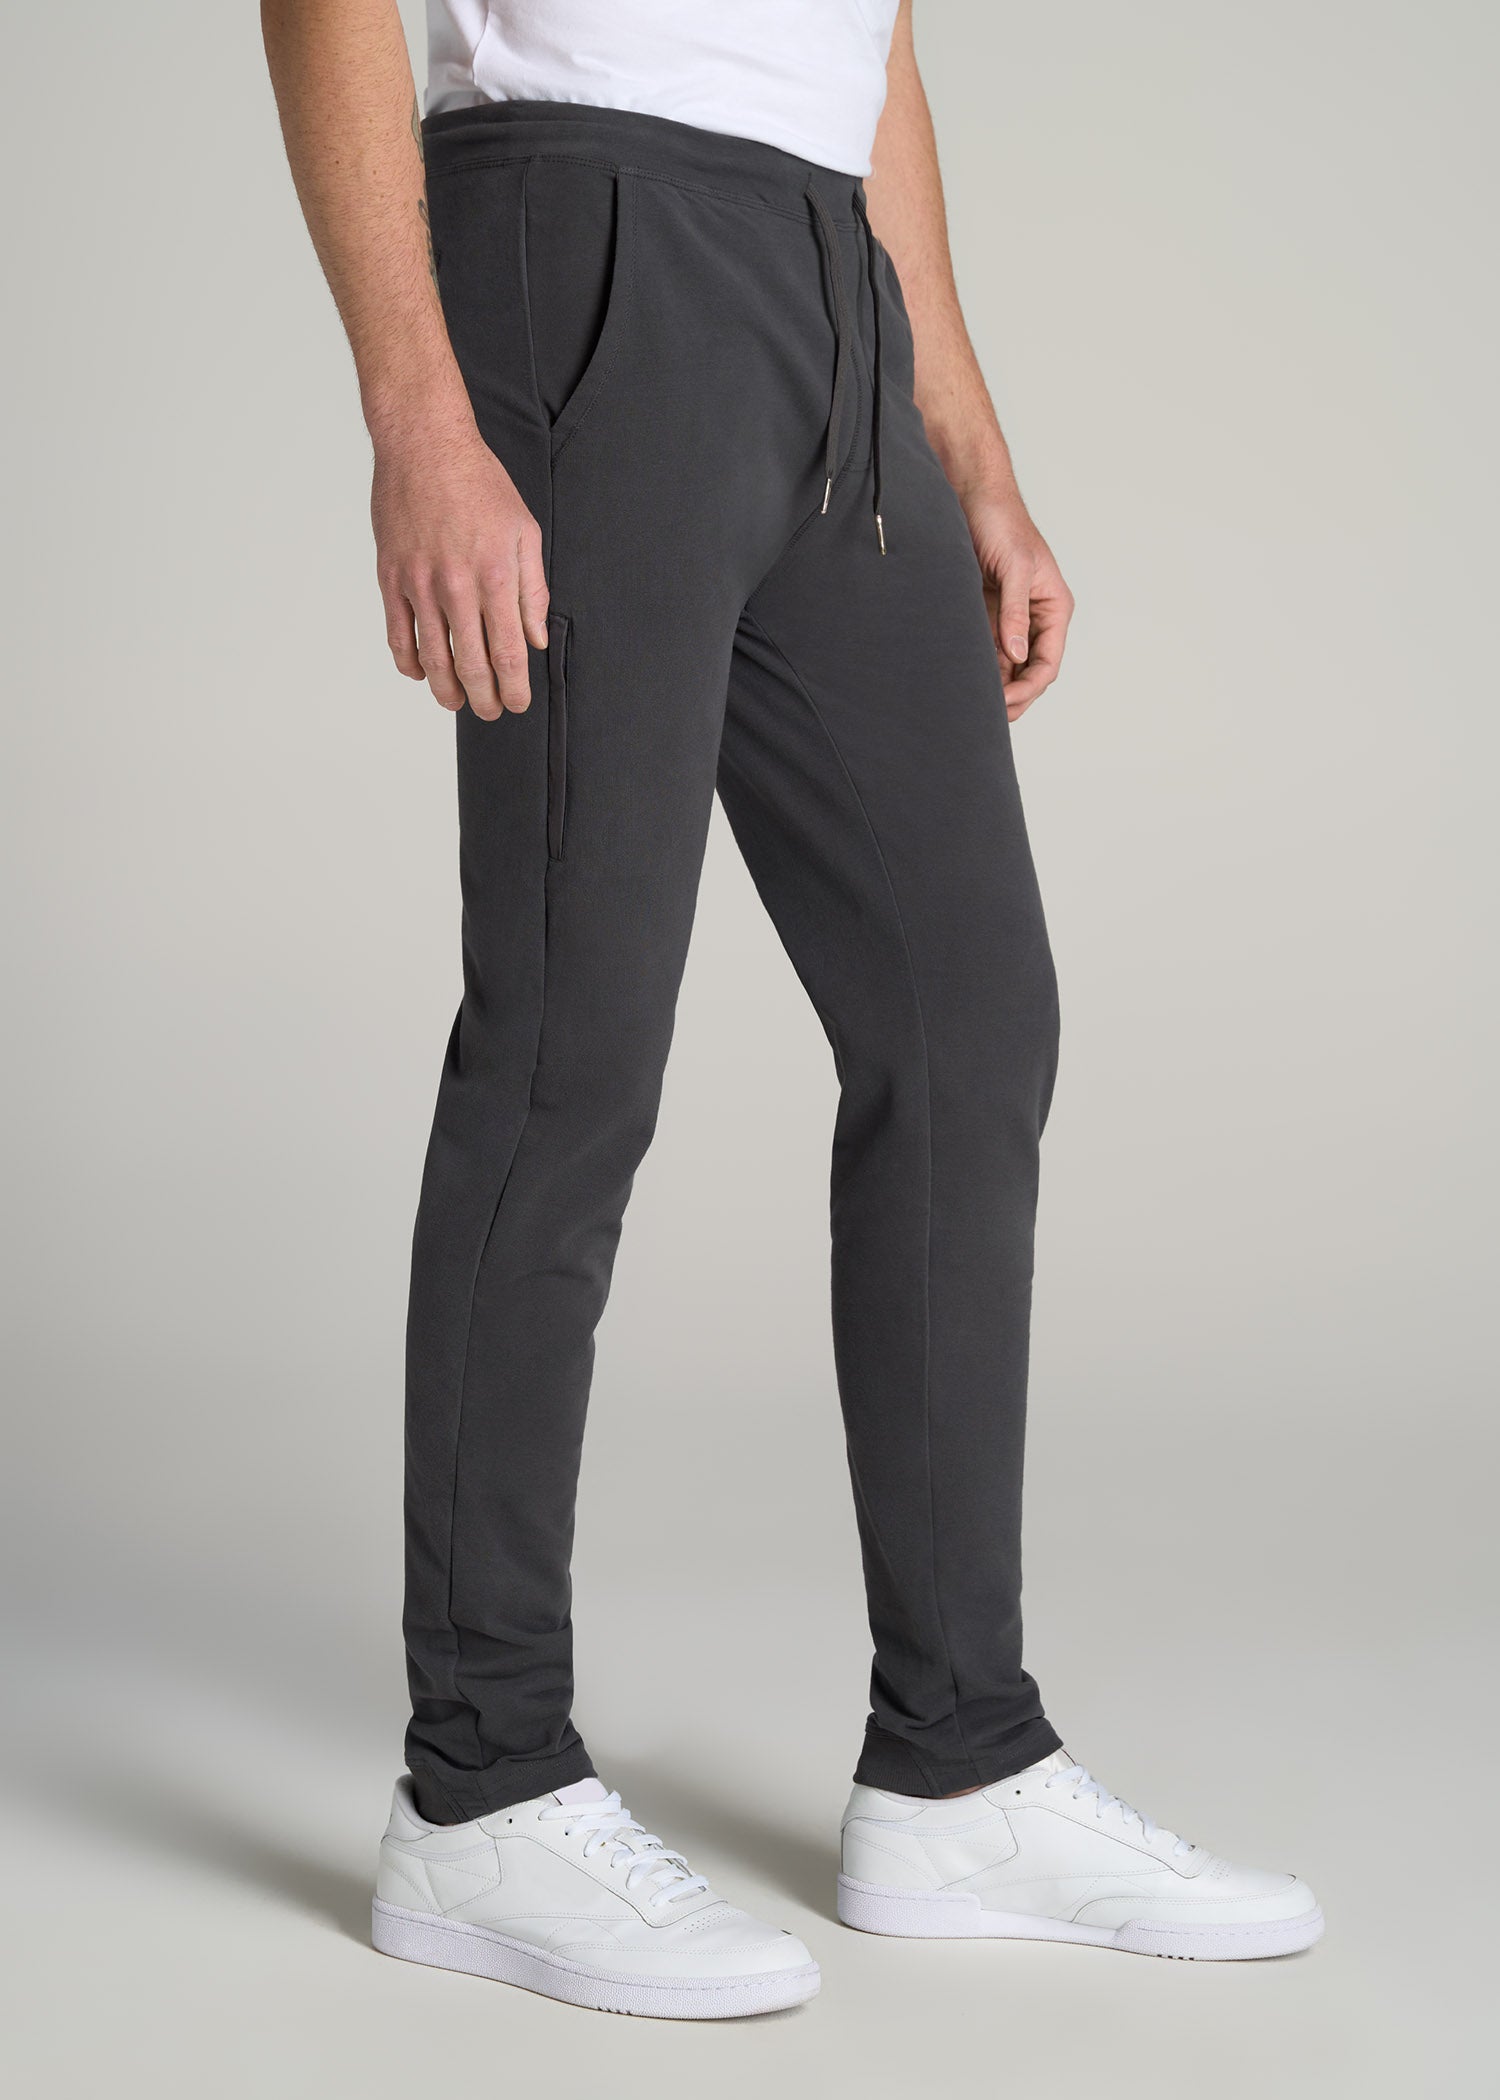 Parisian Tall sweatpants in gray - part of a set